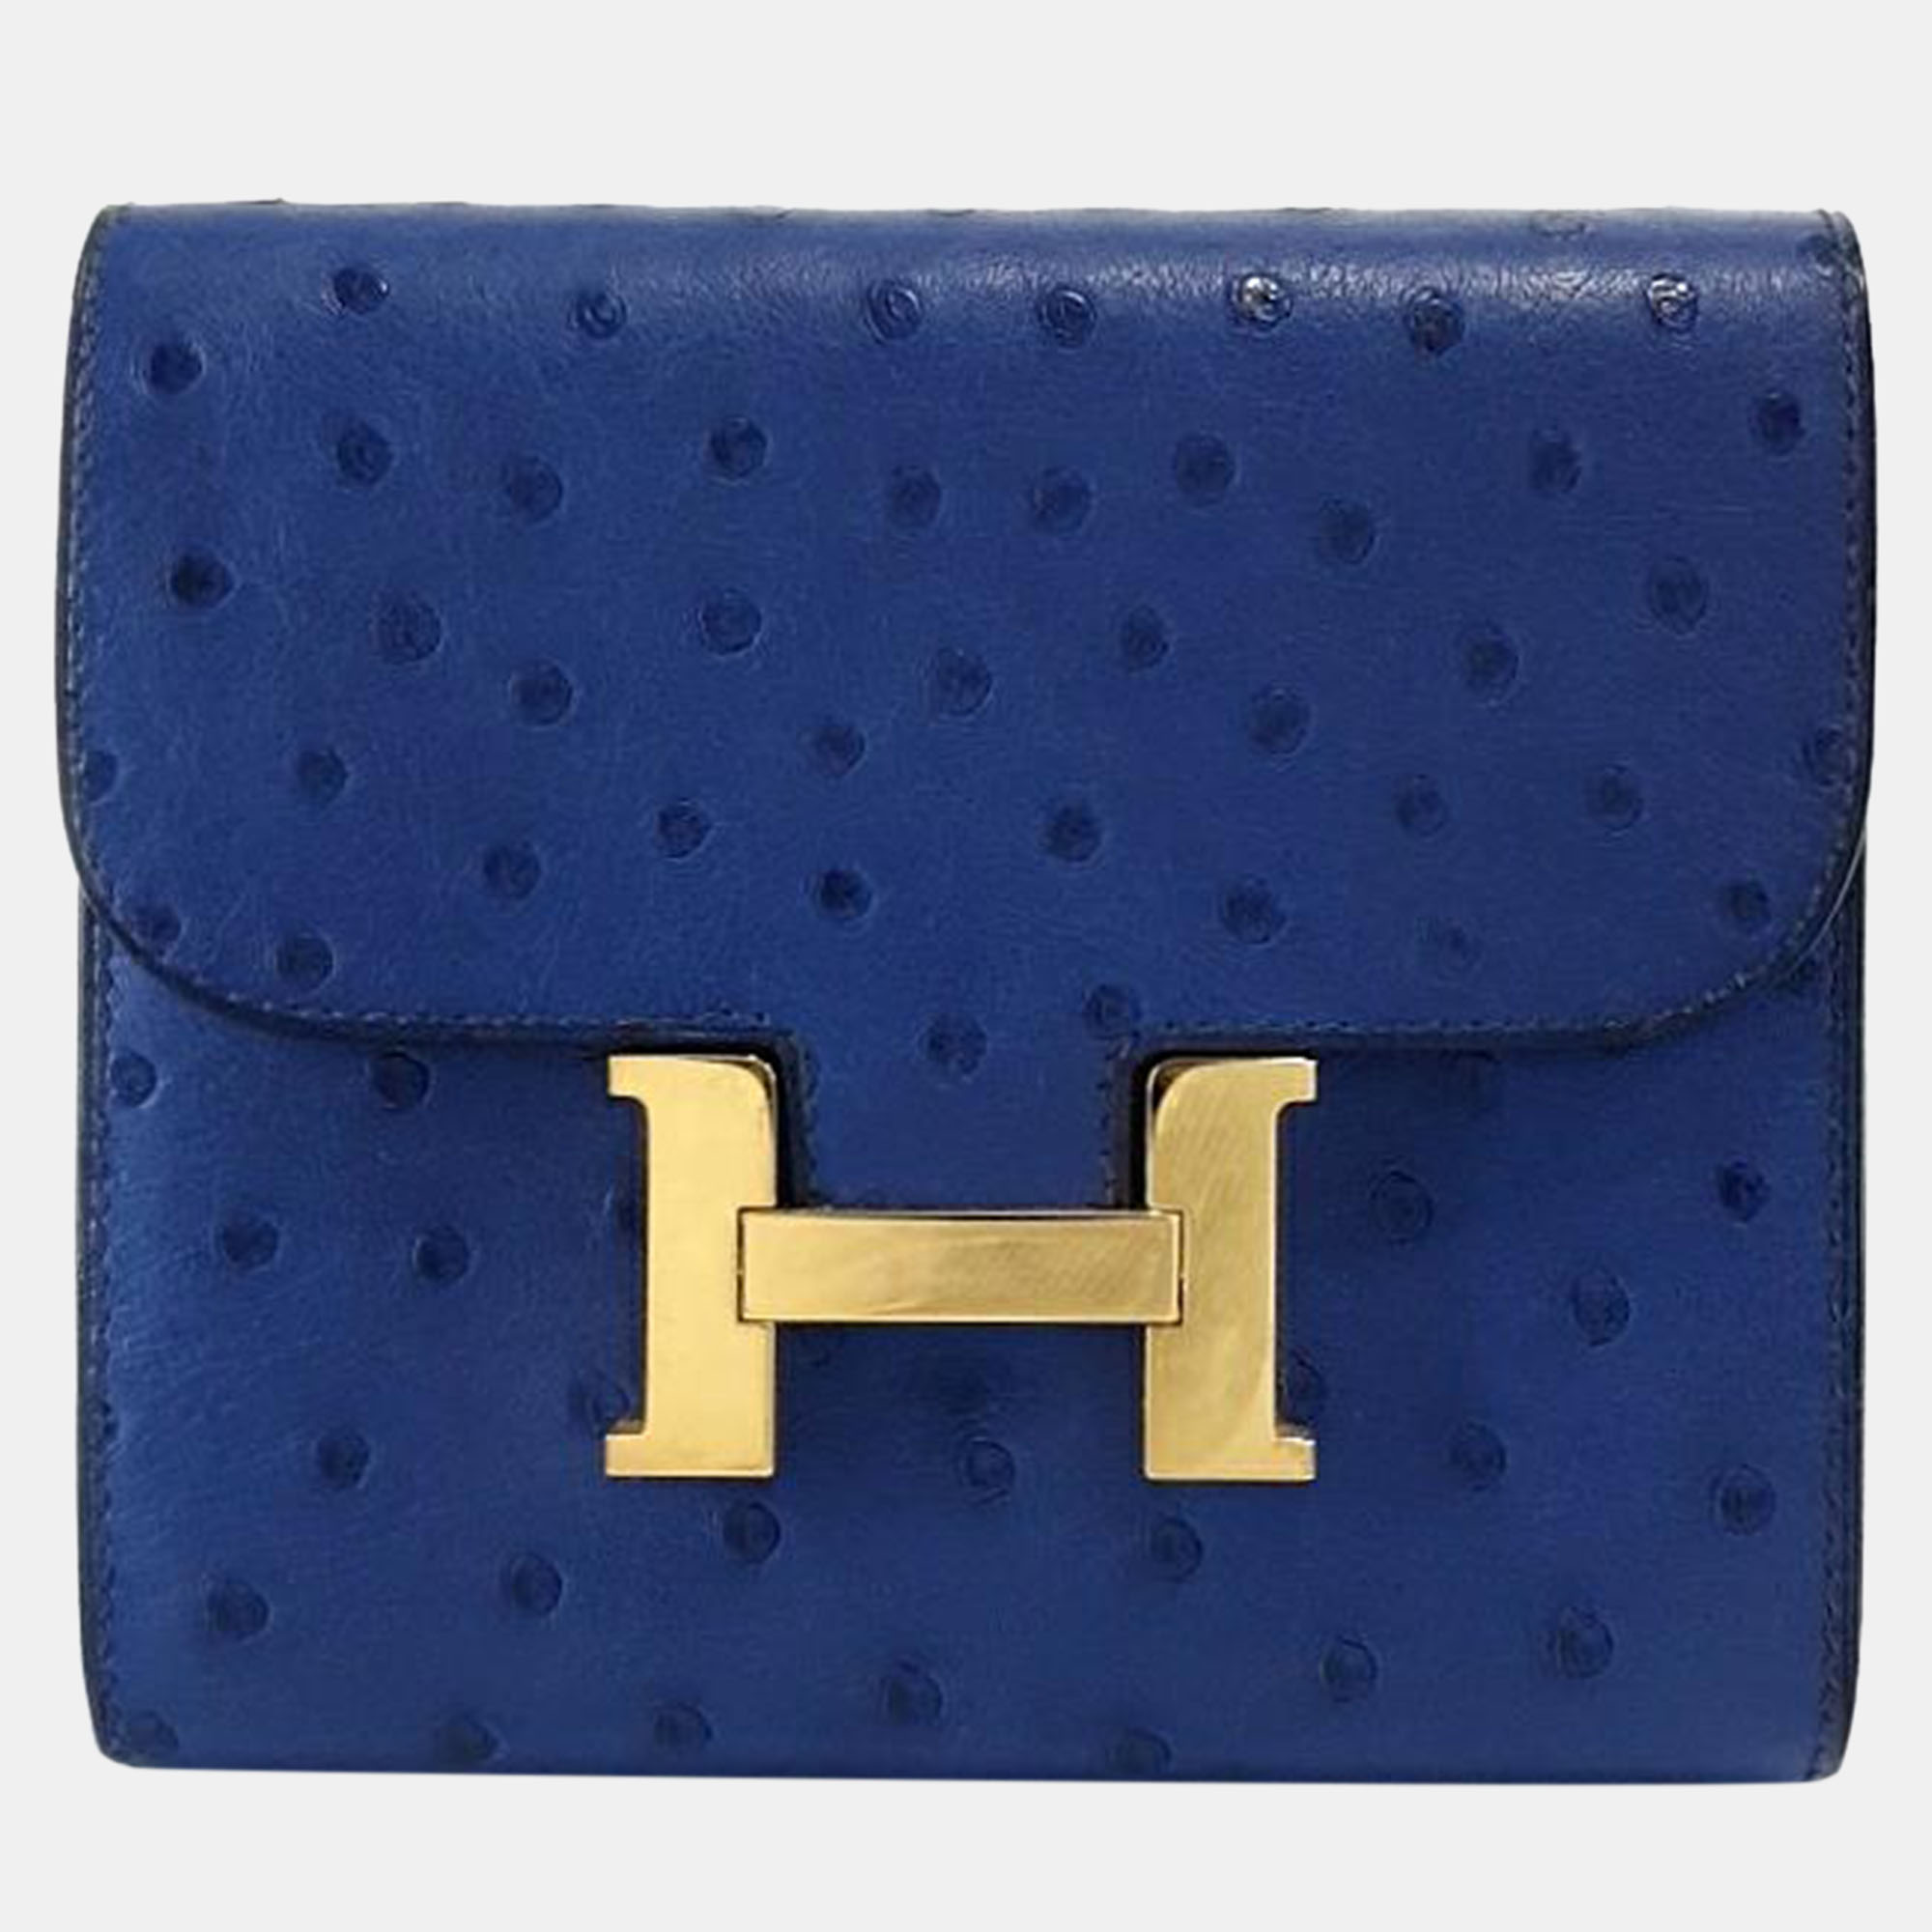 Hermes blue ostrich leather constance wallet